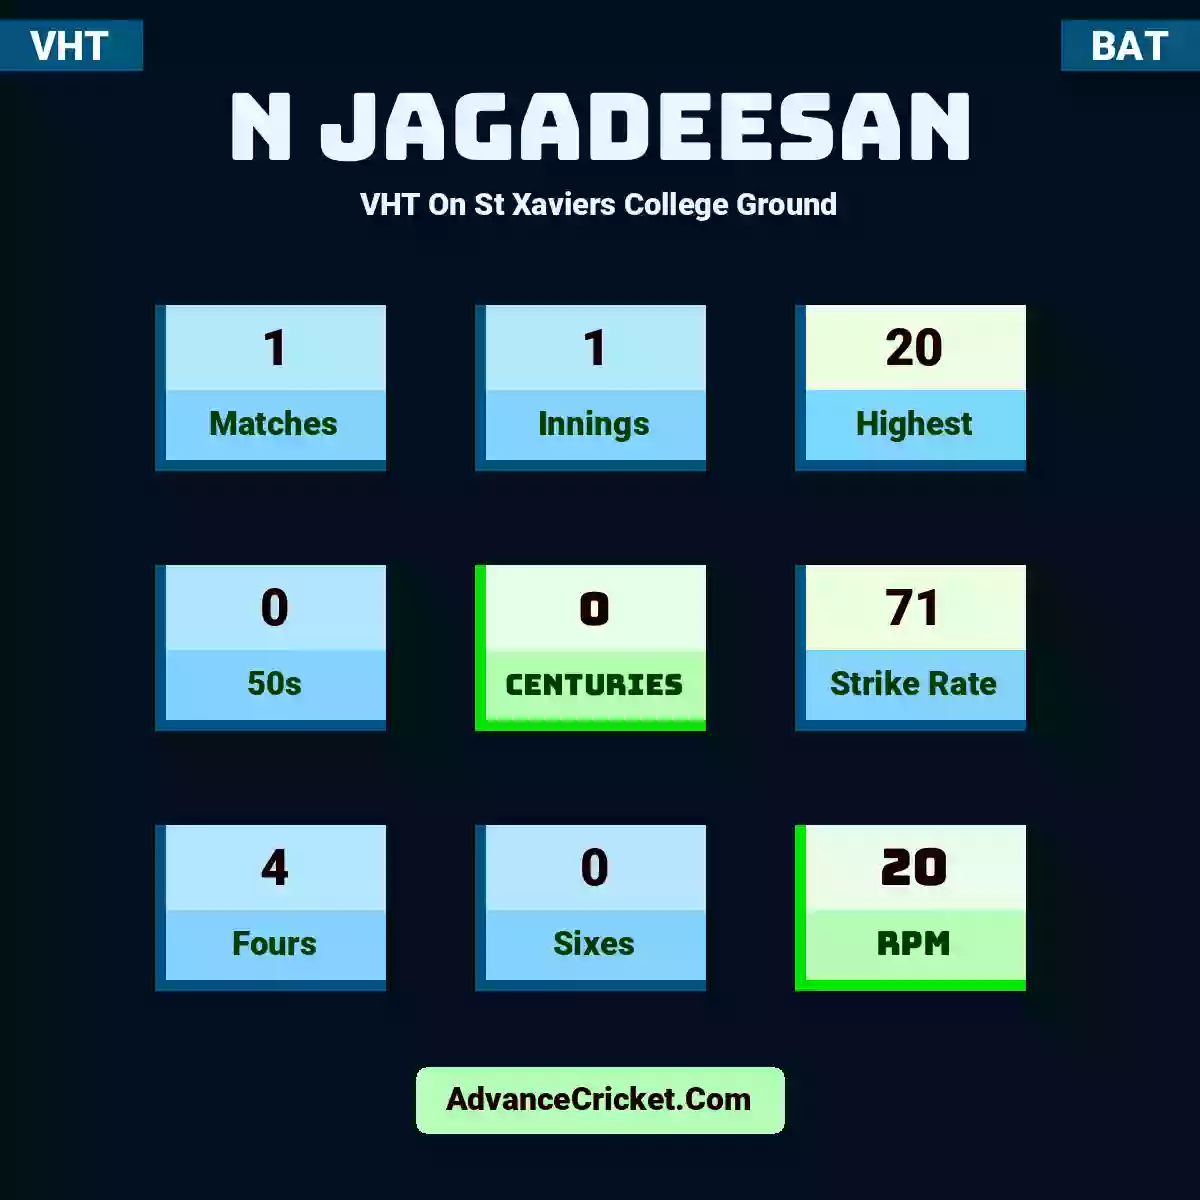 N Jagadeesan VHT  On St Xaviers College Ground, N Jagadeesan played 1 matches, scored 20 runs as highest, 0 half-centuries, and 0 centuries, with a strike rate of 71. N.Jagadeesan hit 4 fours and 0 sixes, with an RPM of 20.